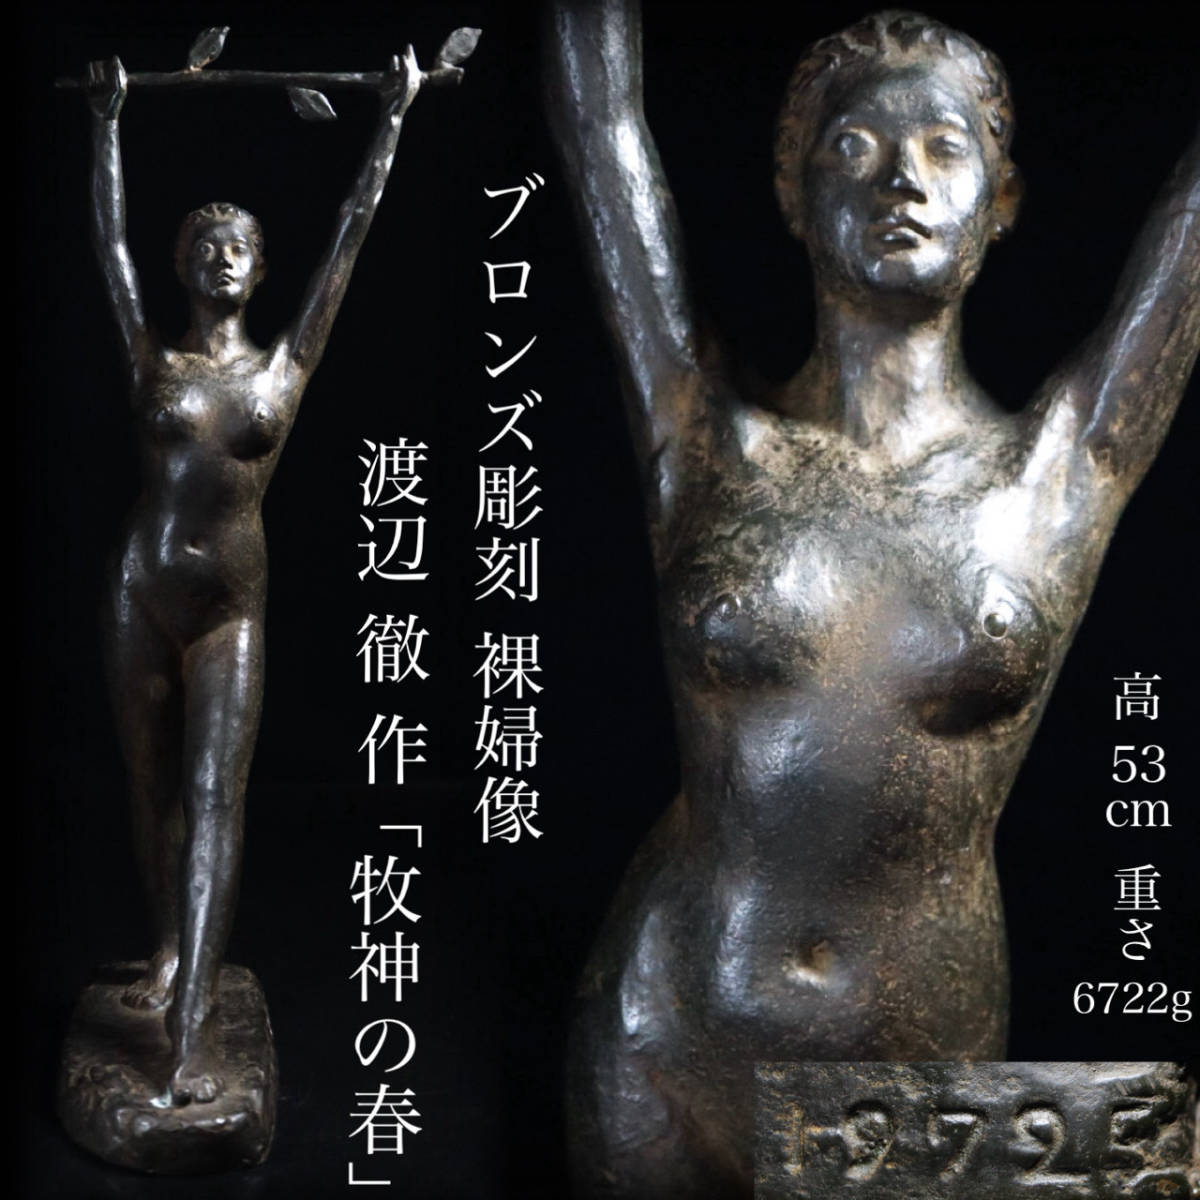 ◆雅◆ 真作保証 日展会員【渡辺徹】作 1972年(昭和47年) ブロンズ像 彫刻 裸婦像 「牧神の春」 共箱 /BOA.24.1 [E46] OW